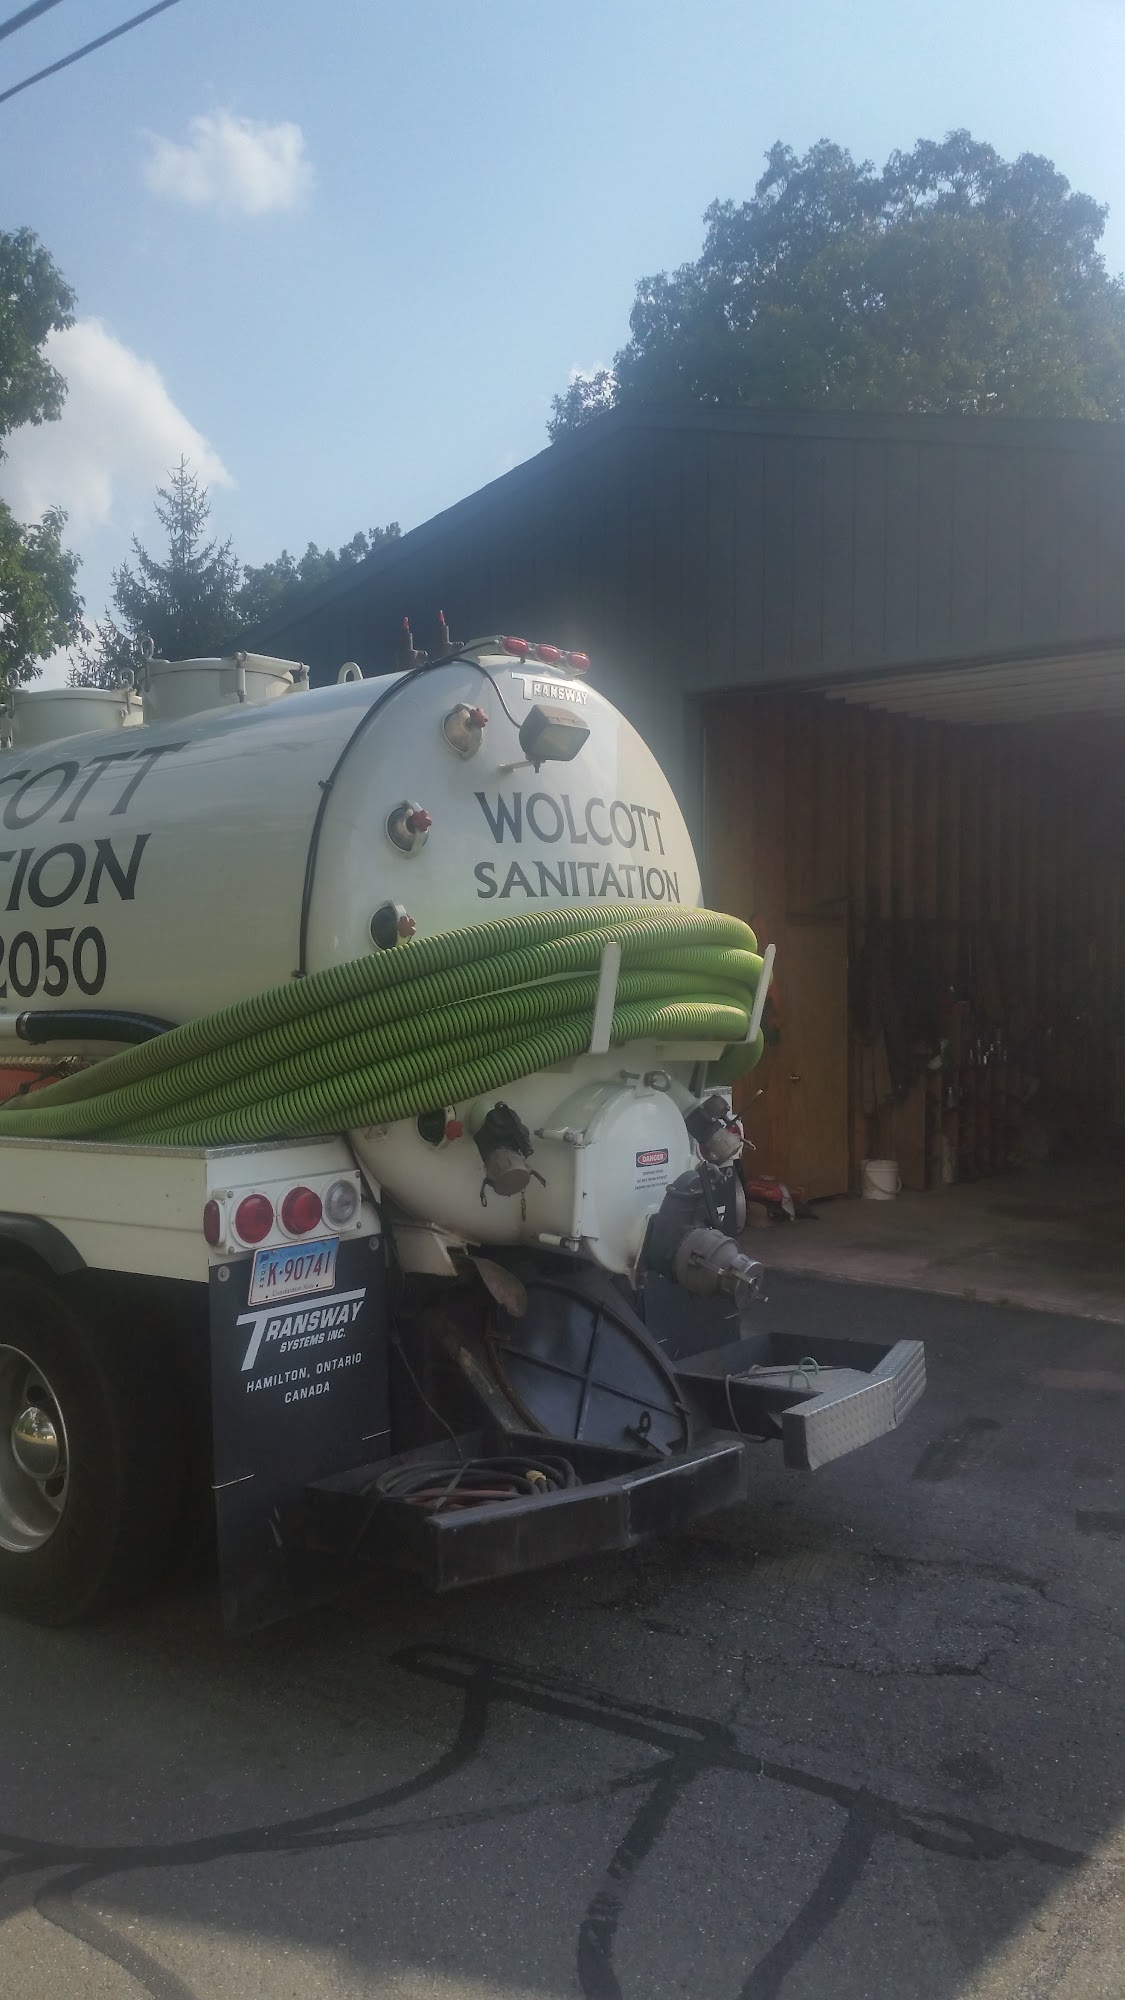 Wolcott Sanitation Services, LLC 580 Wolcott Rd, Wolcott Connecticut 06716